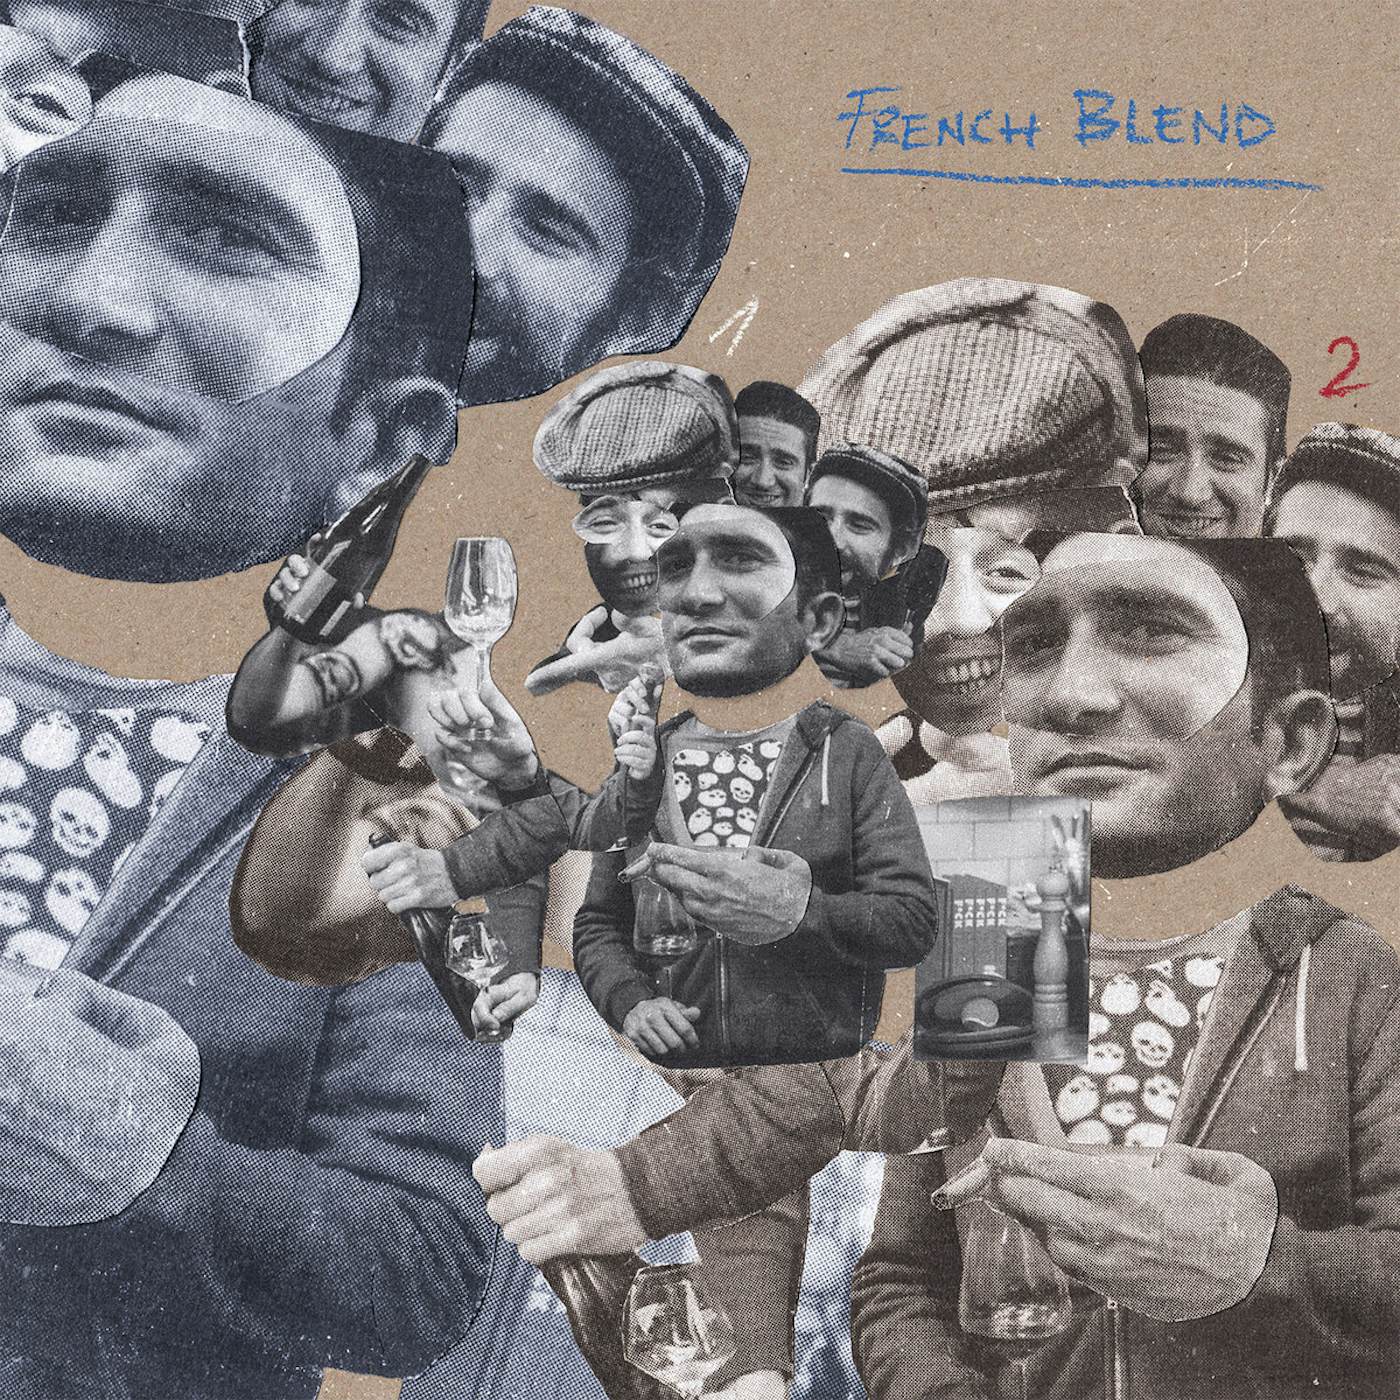 The Alchemist FRENCH BLEND PARTS 1 & 2 Vinyl Record